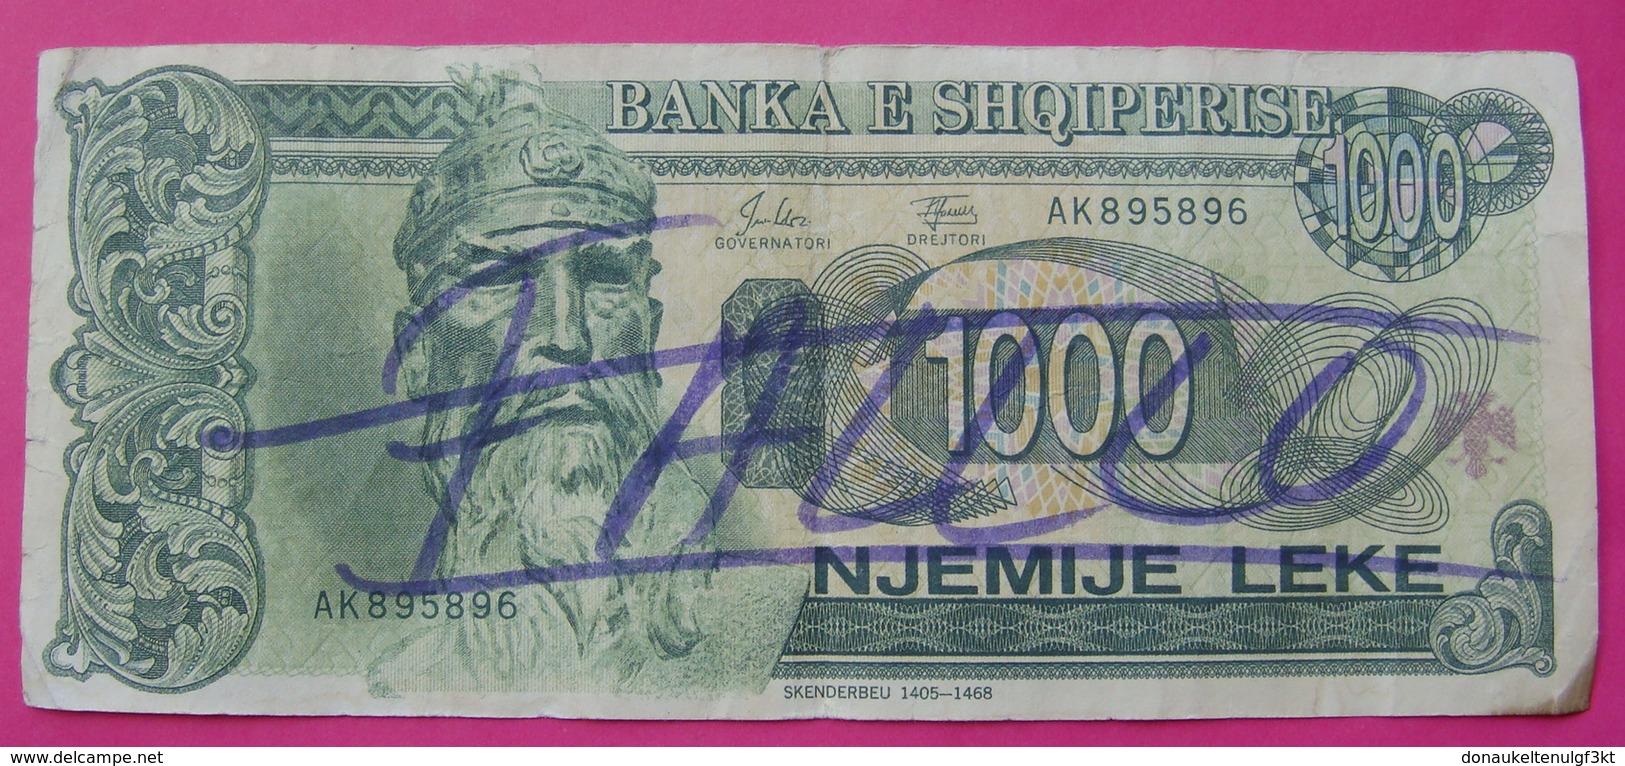 ALBANIA 1000 LEKE 1994. GOOD FORGERY VERY RARE, CANCELLED FROM BANK, Serial No. AK  895896 - Albania